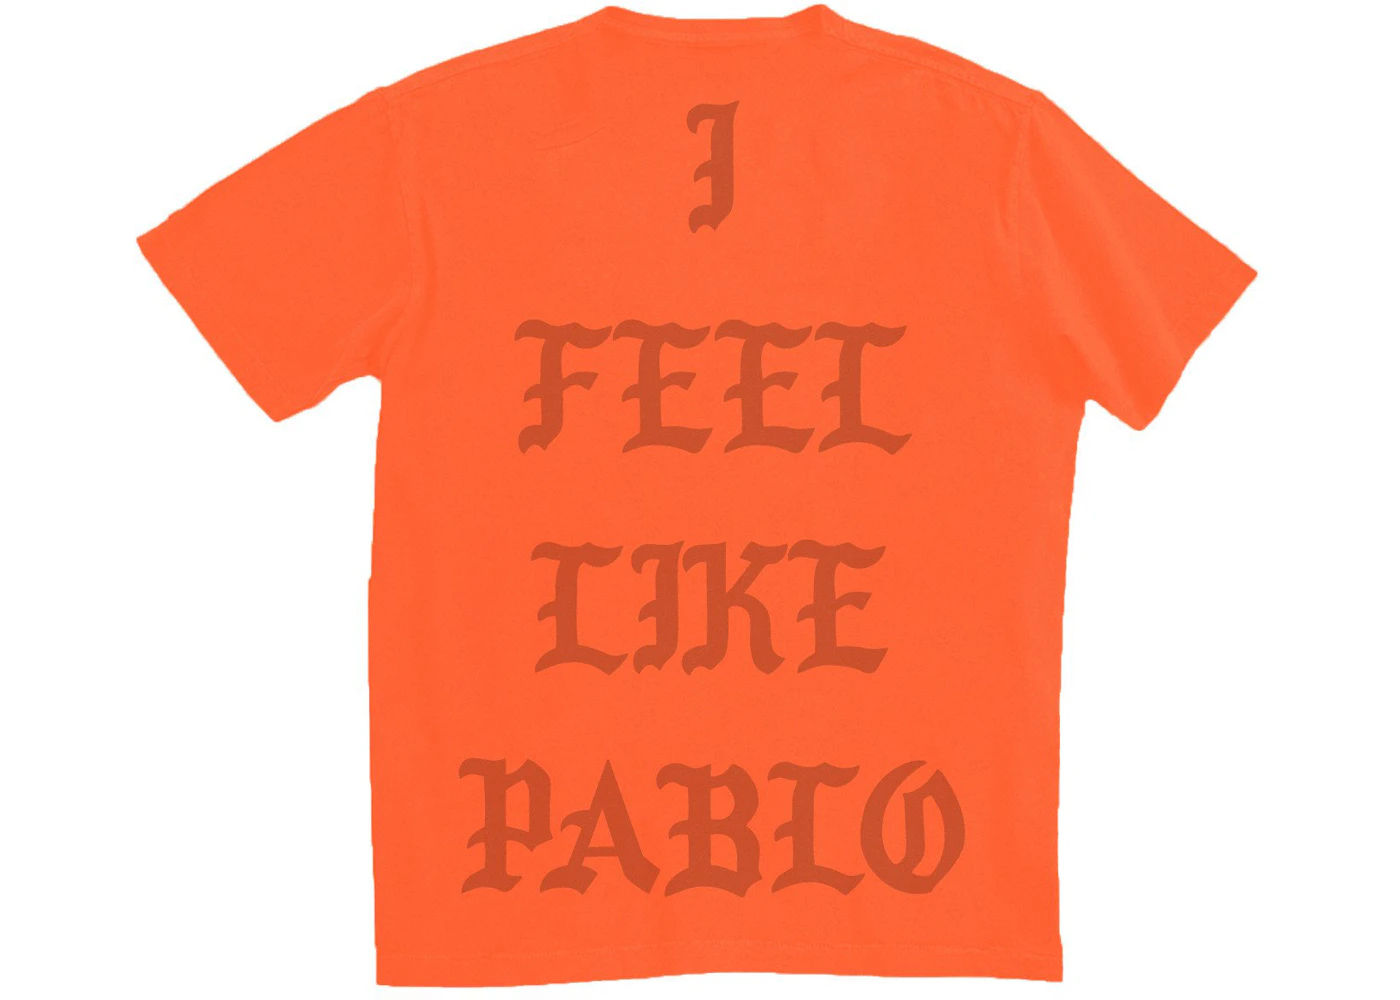 Link Distribution Craftsman Kanye West Boston Pablo Pop-Up I Feel Like Pablo T-shirt Safety Orange - US